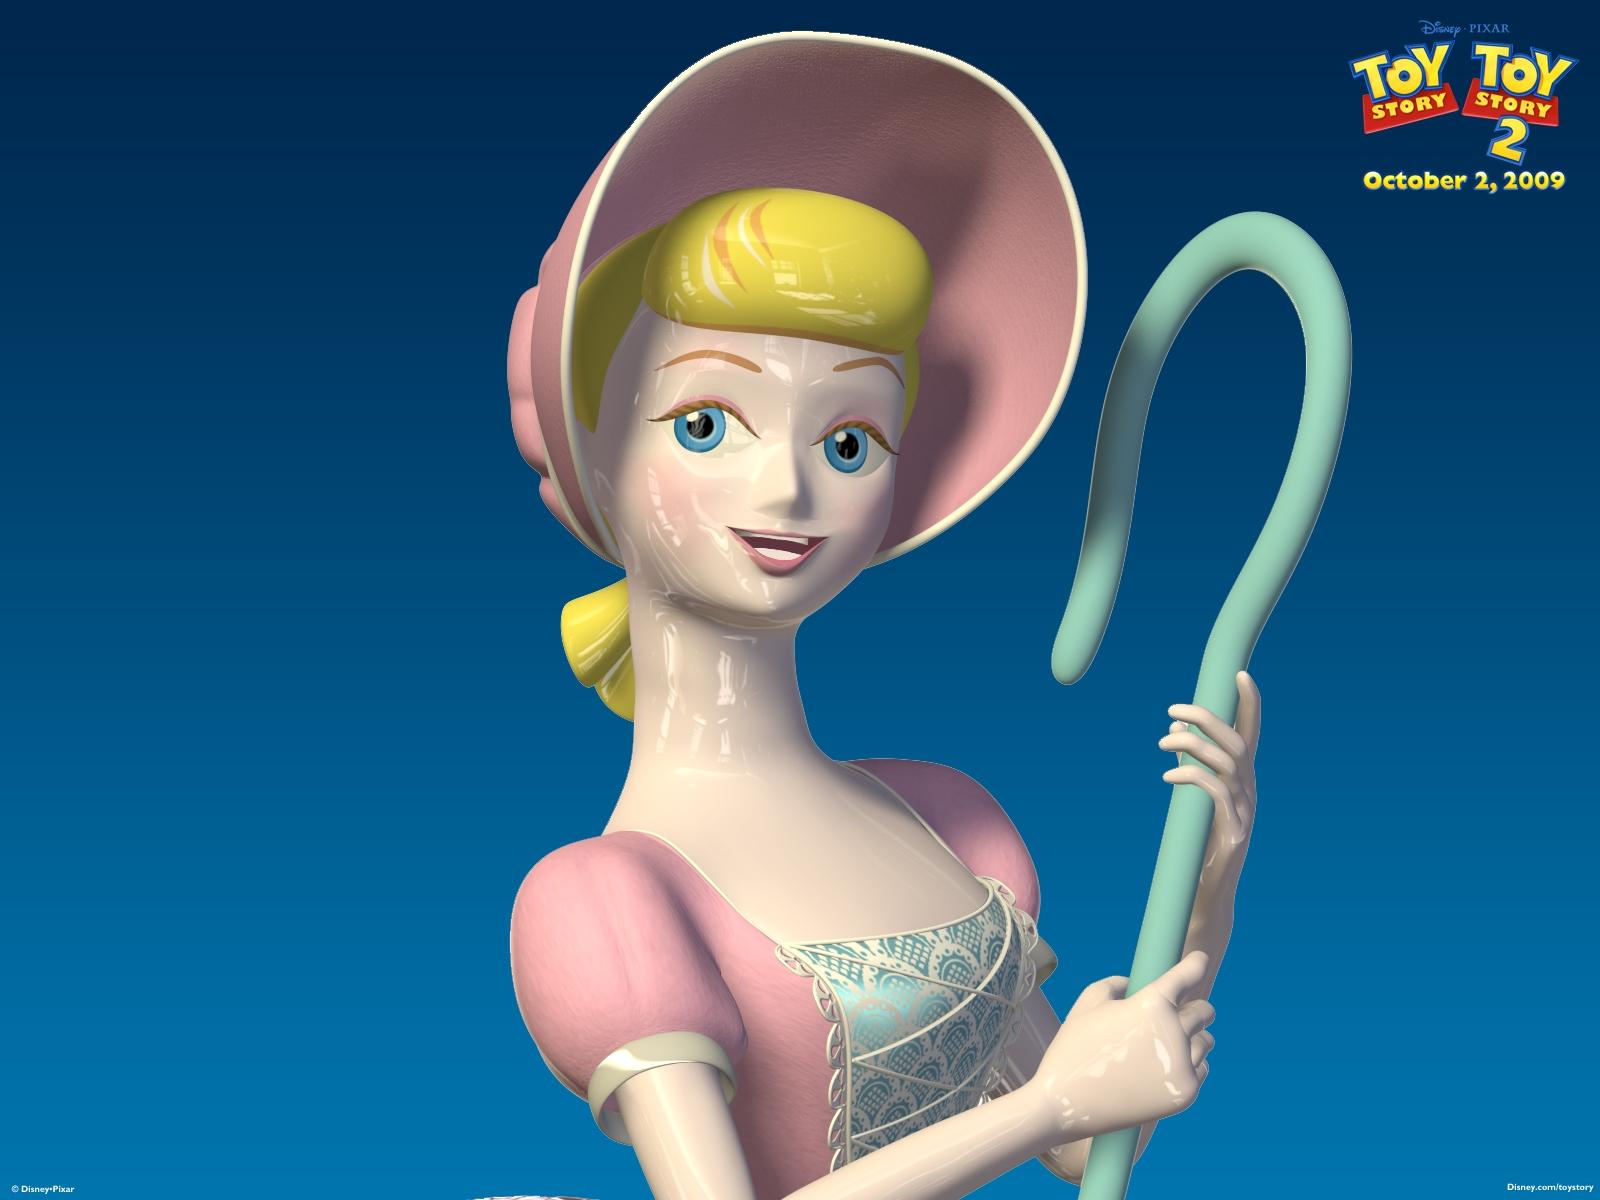 Toy Story 2 - Disney Image (25300939) - Fanpop